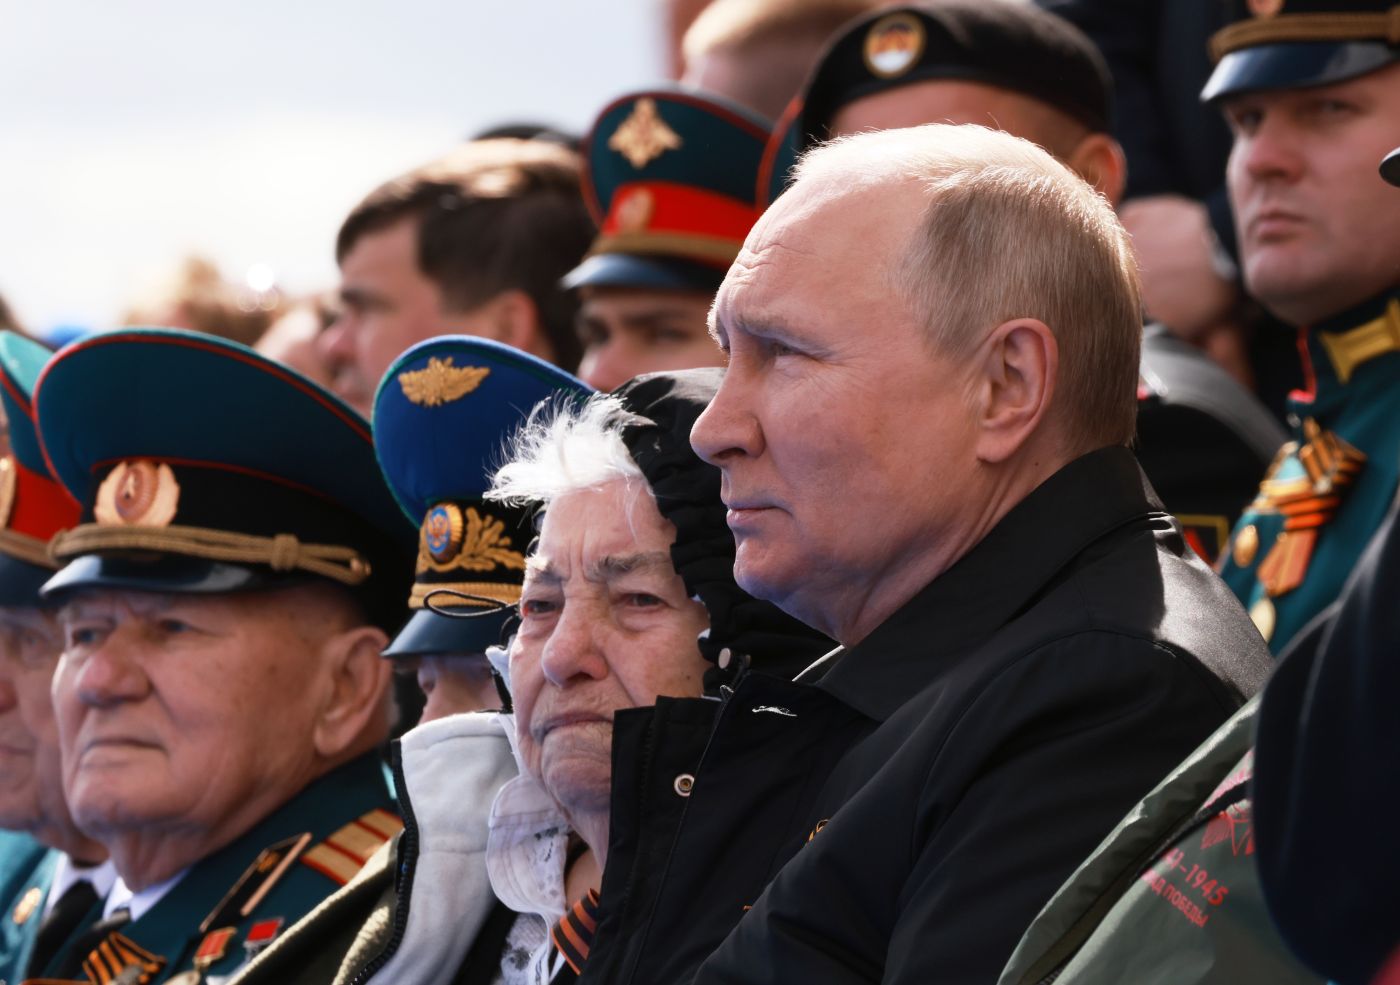 B.Πούτιν: «H Δύση ετοιμαζόταν για εισβολή στη γη μας – Δώσαμε προληπτική απάντηση» – Εικόνες από την παρέλαση